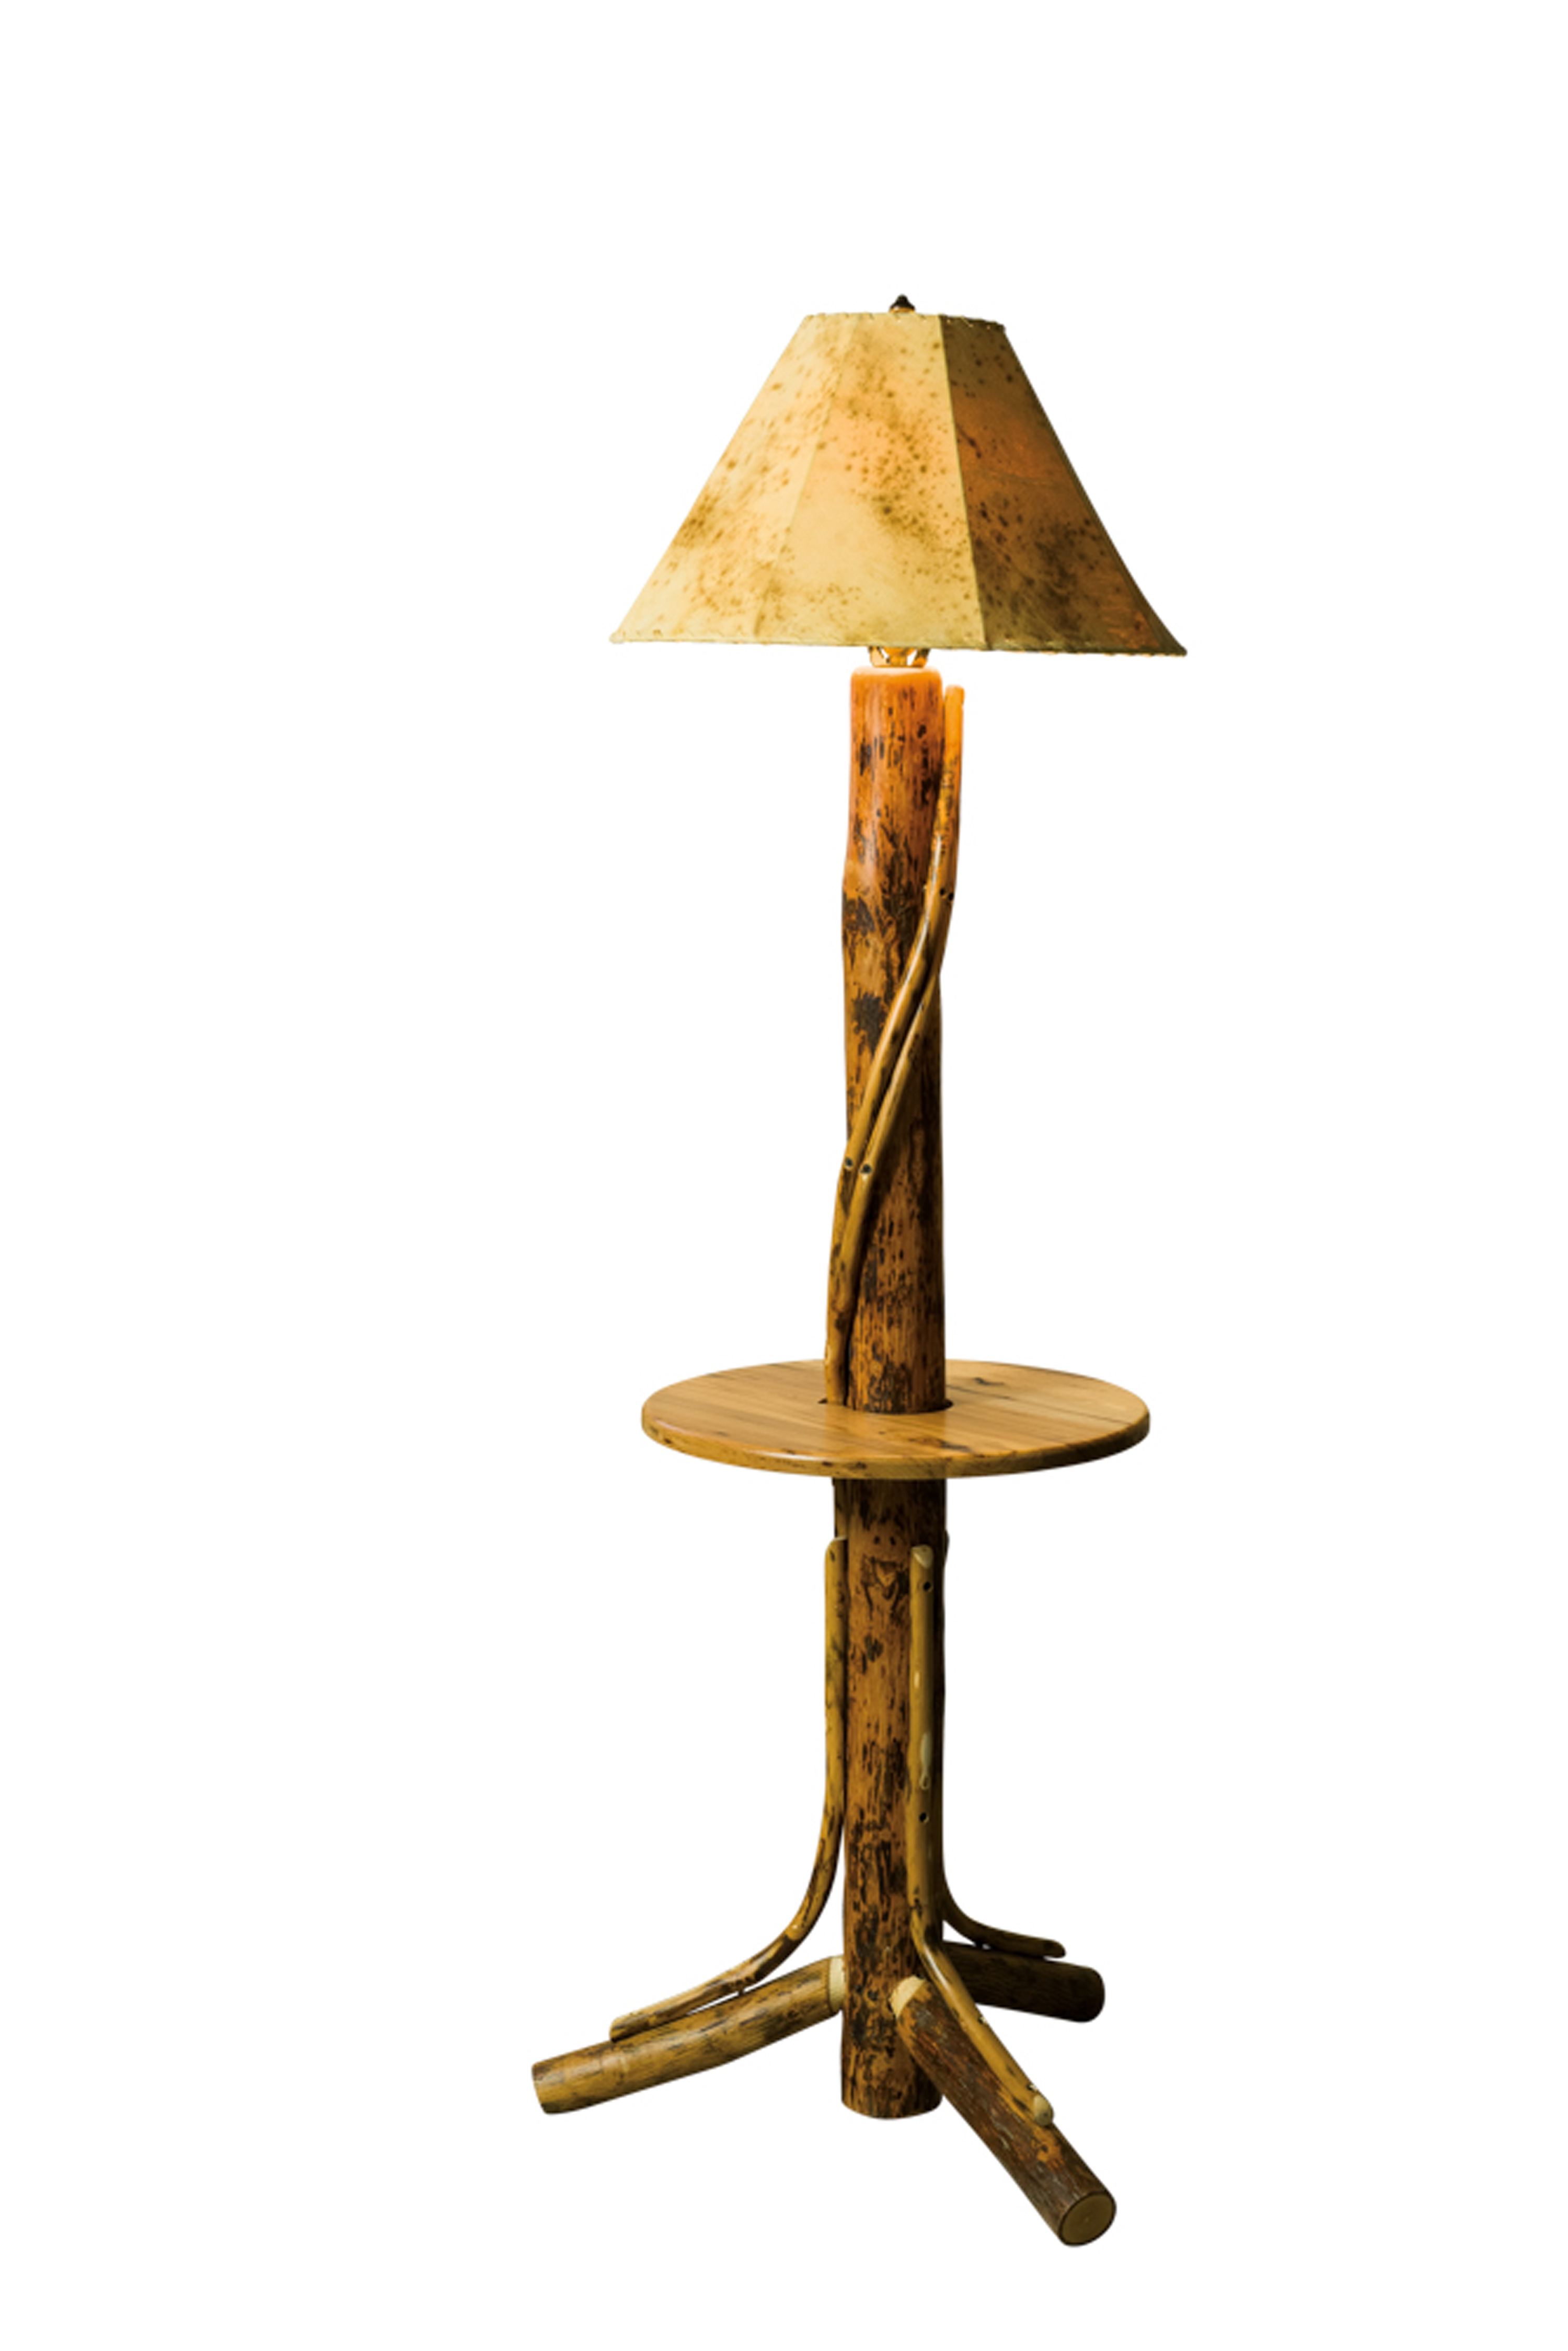 https://0201.nccdn.net/4_2/000/000/06c/bba/355-Floor-Lamp-With-Shelf.jpg